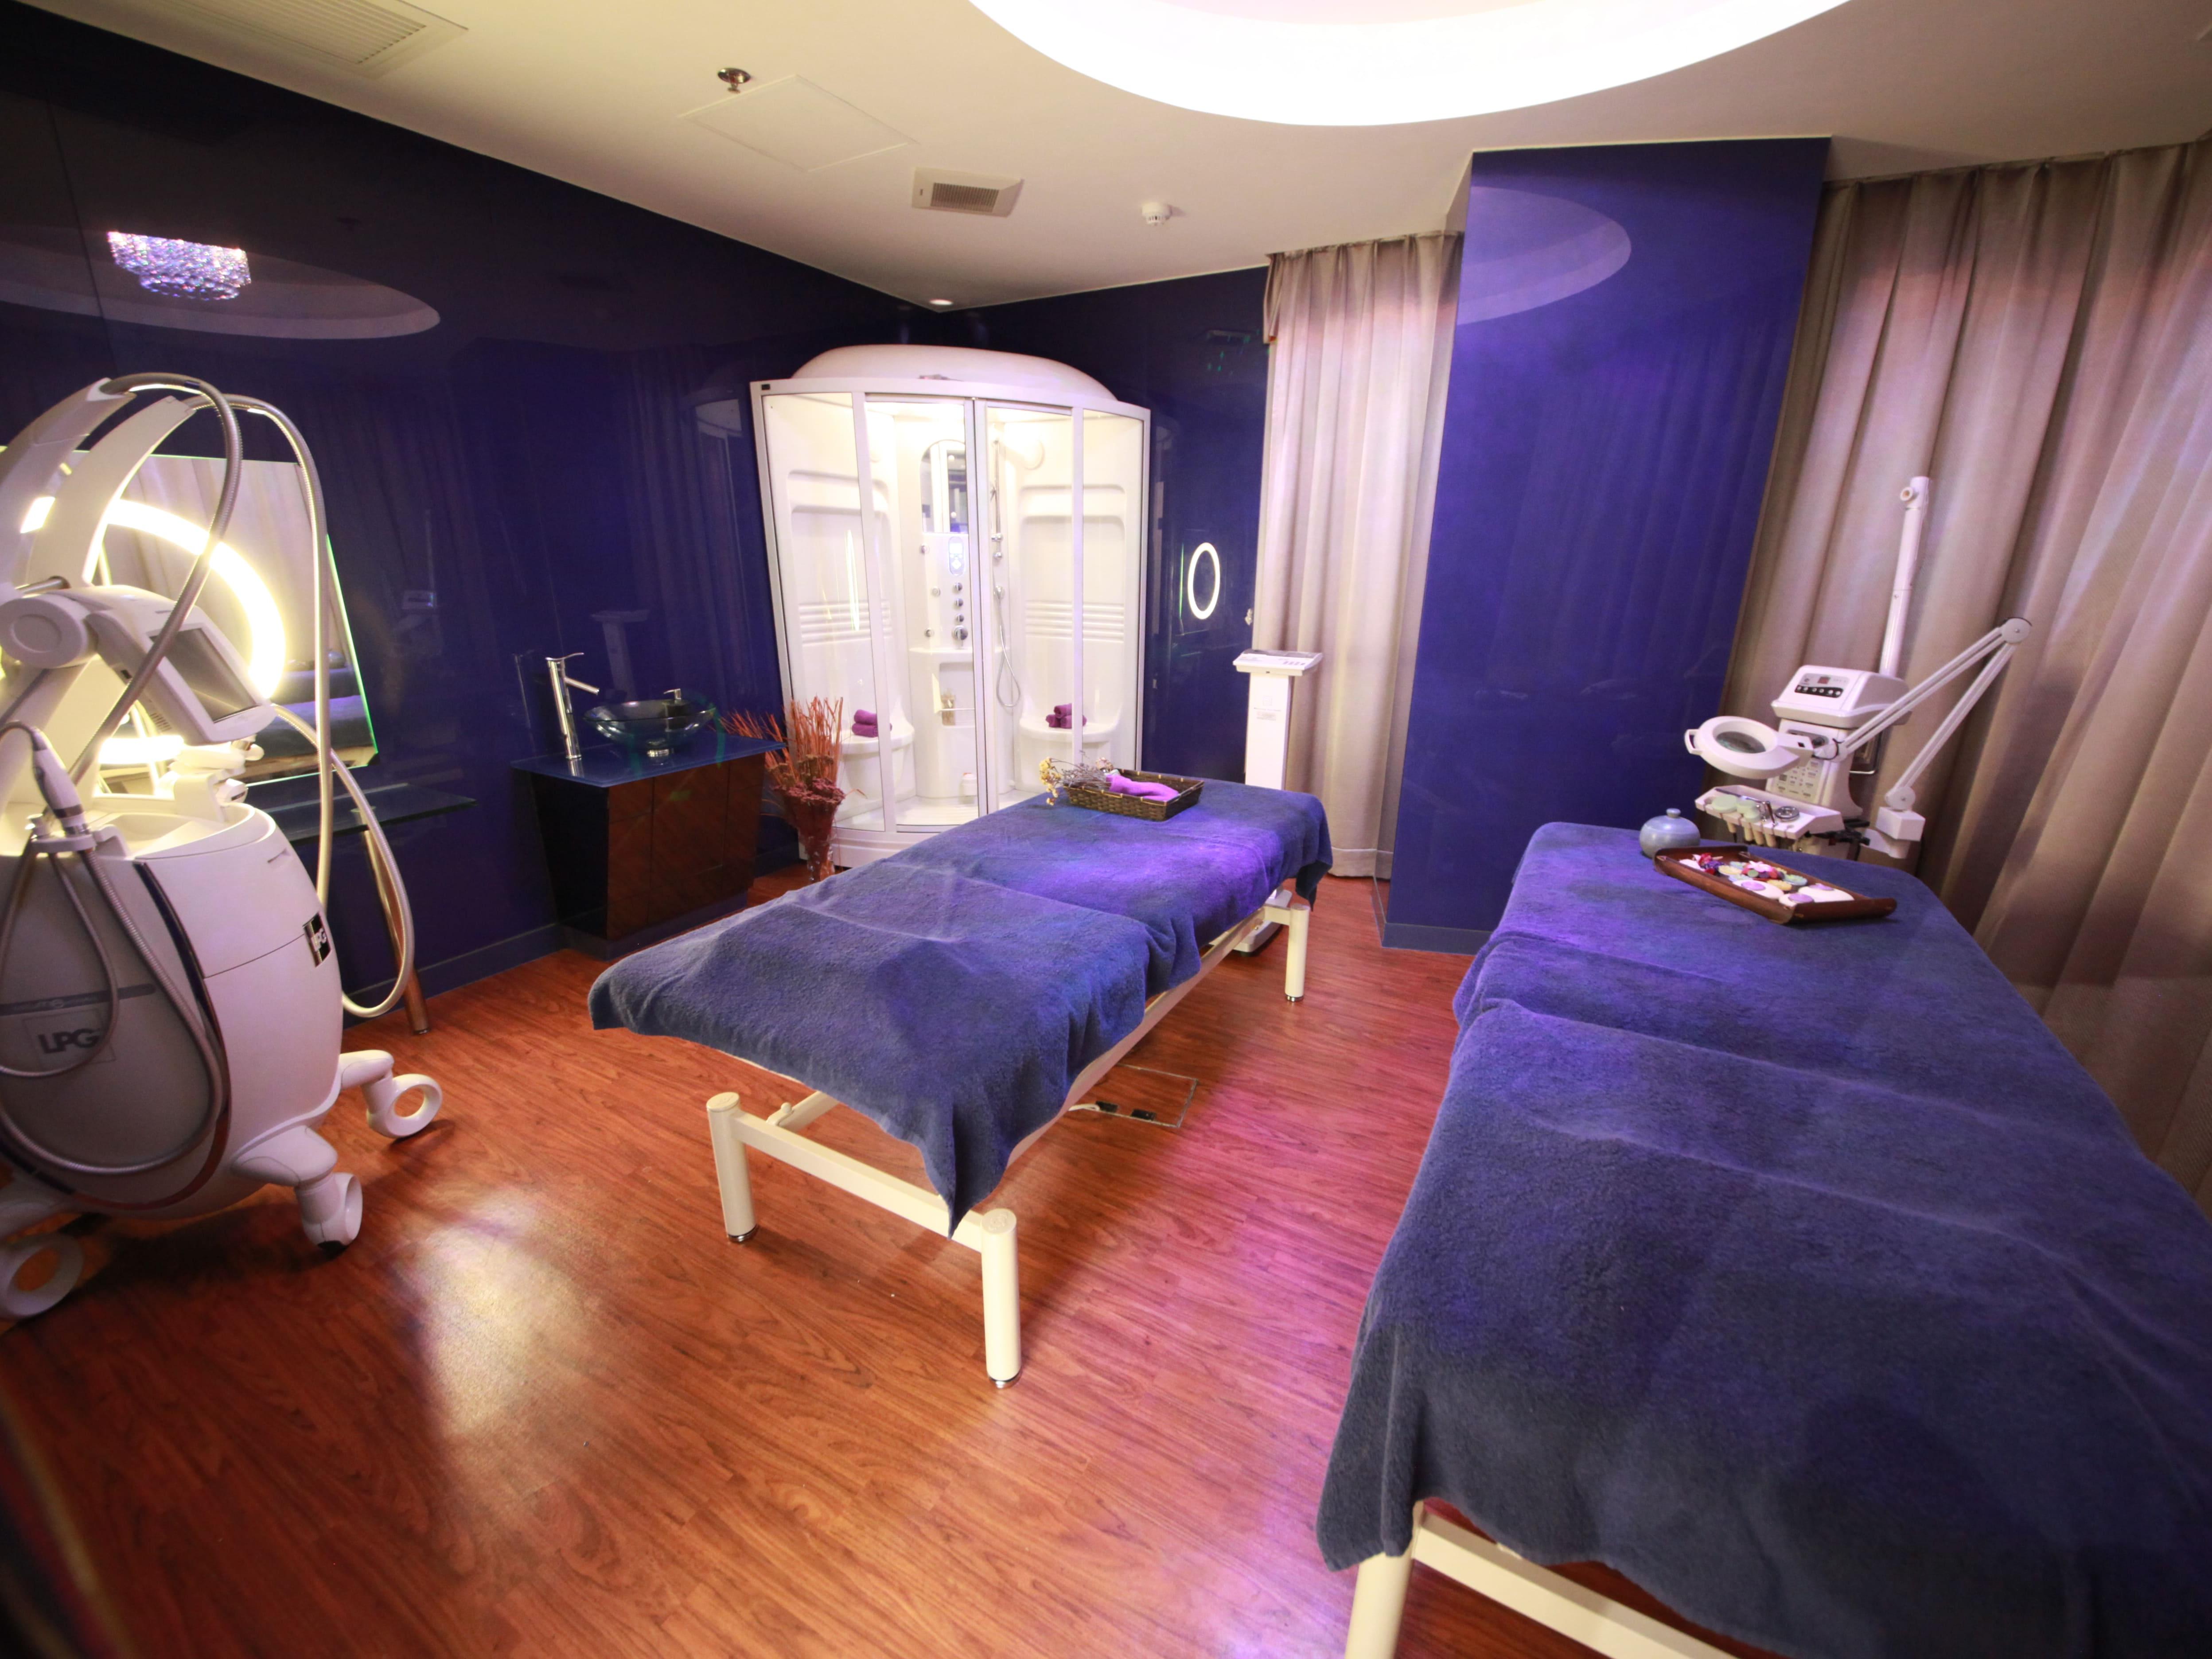 Beauty Care stream: Spa treatment room